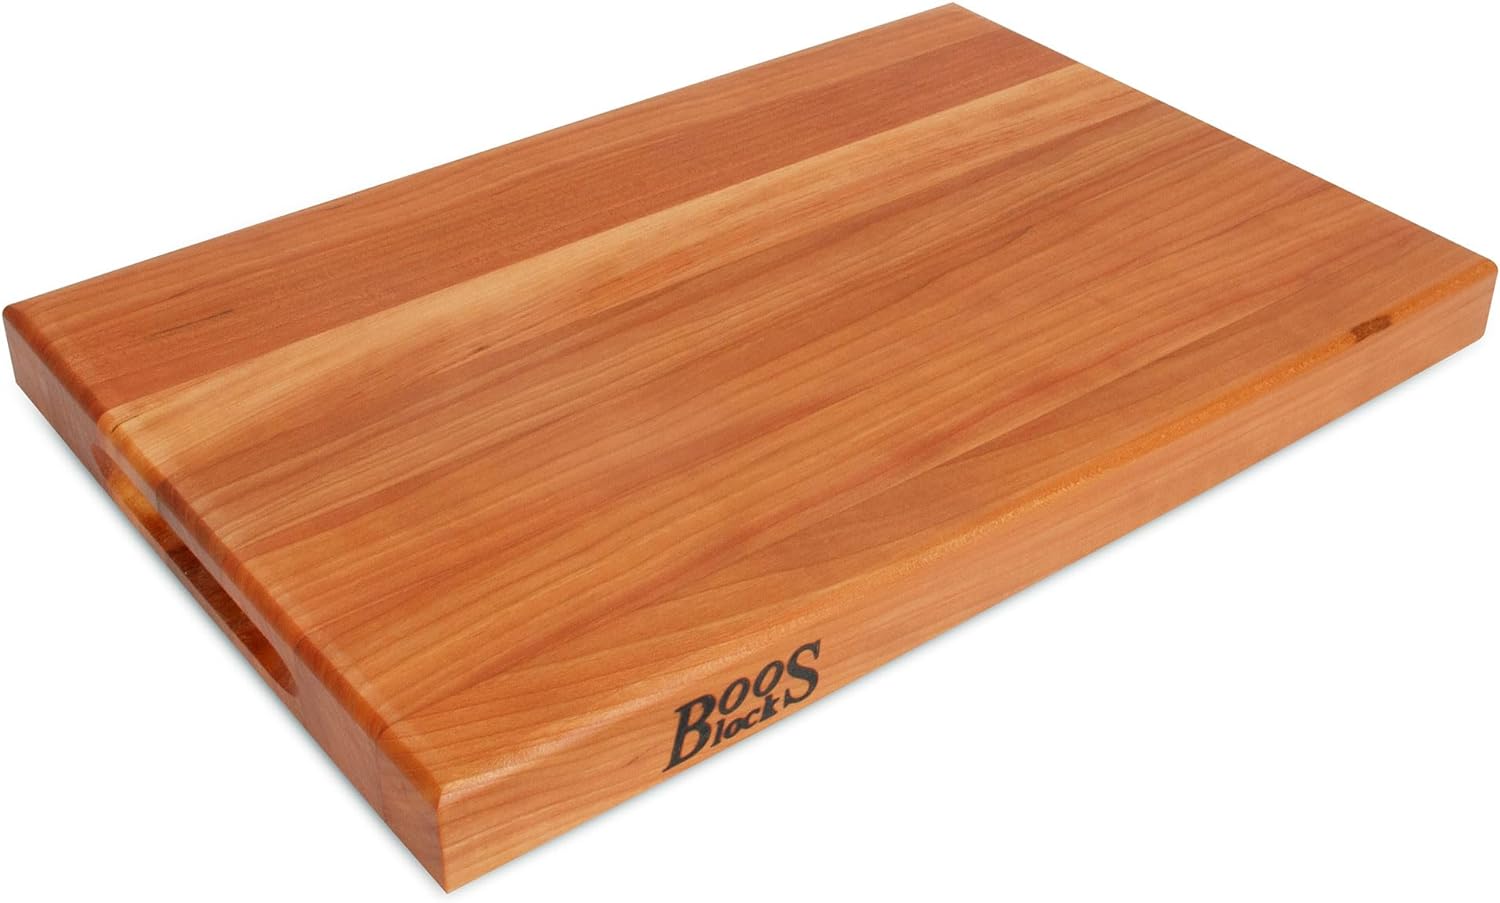 John Boos Cherry Wood Cutting Board for Kitchen Prep